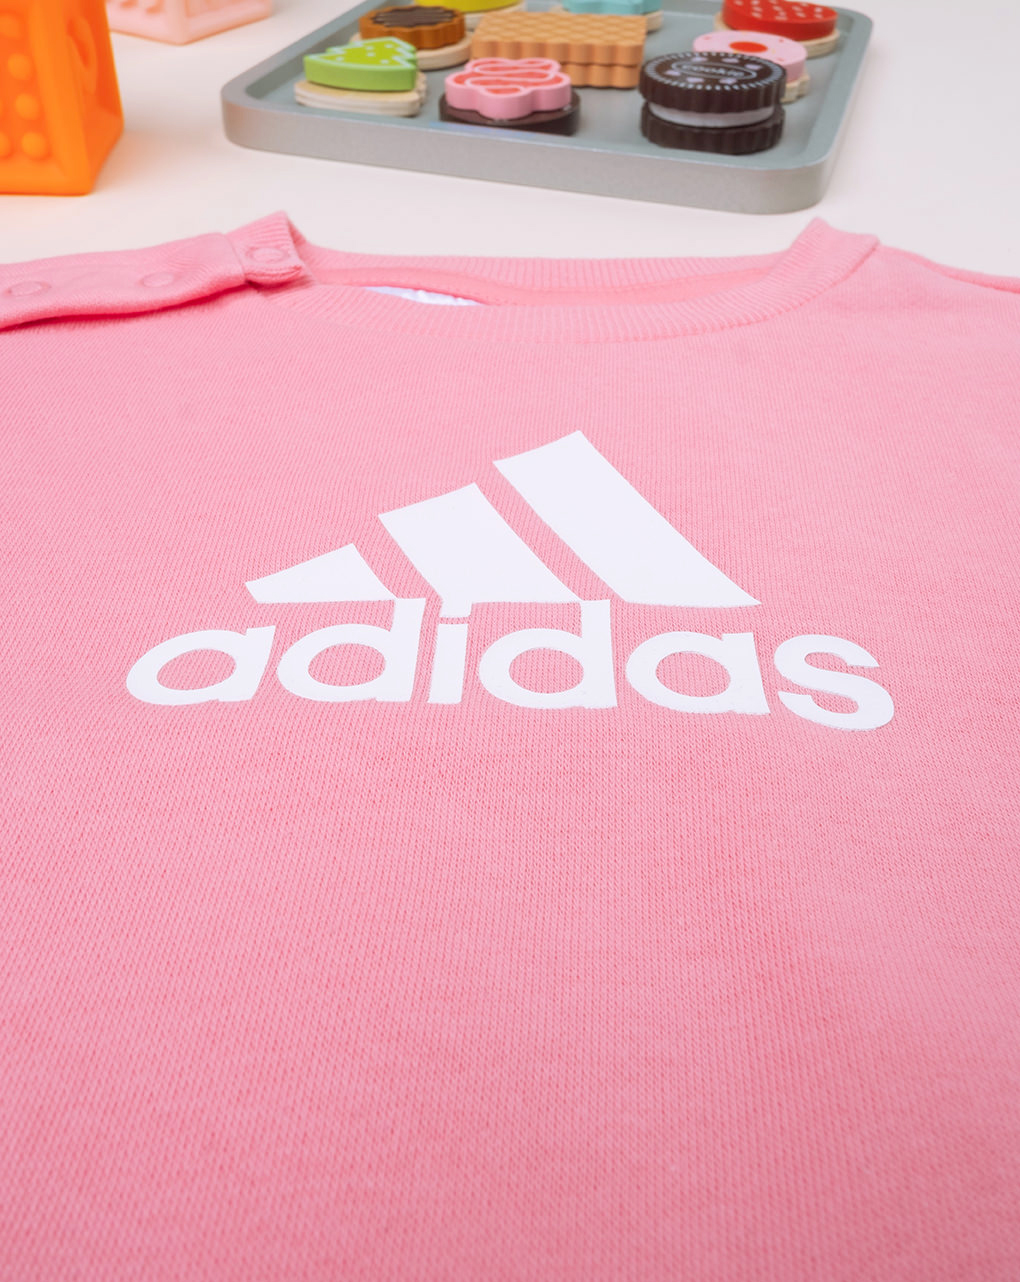 Chandal adidas rosa - Adidas